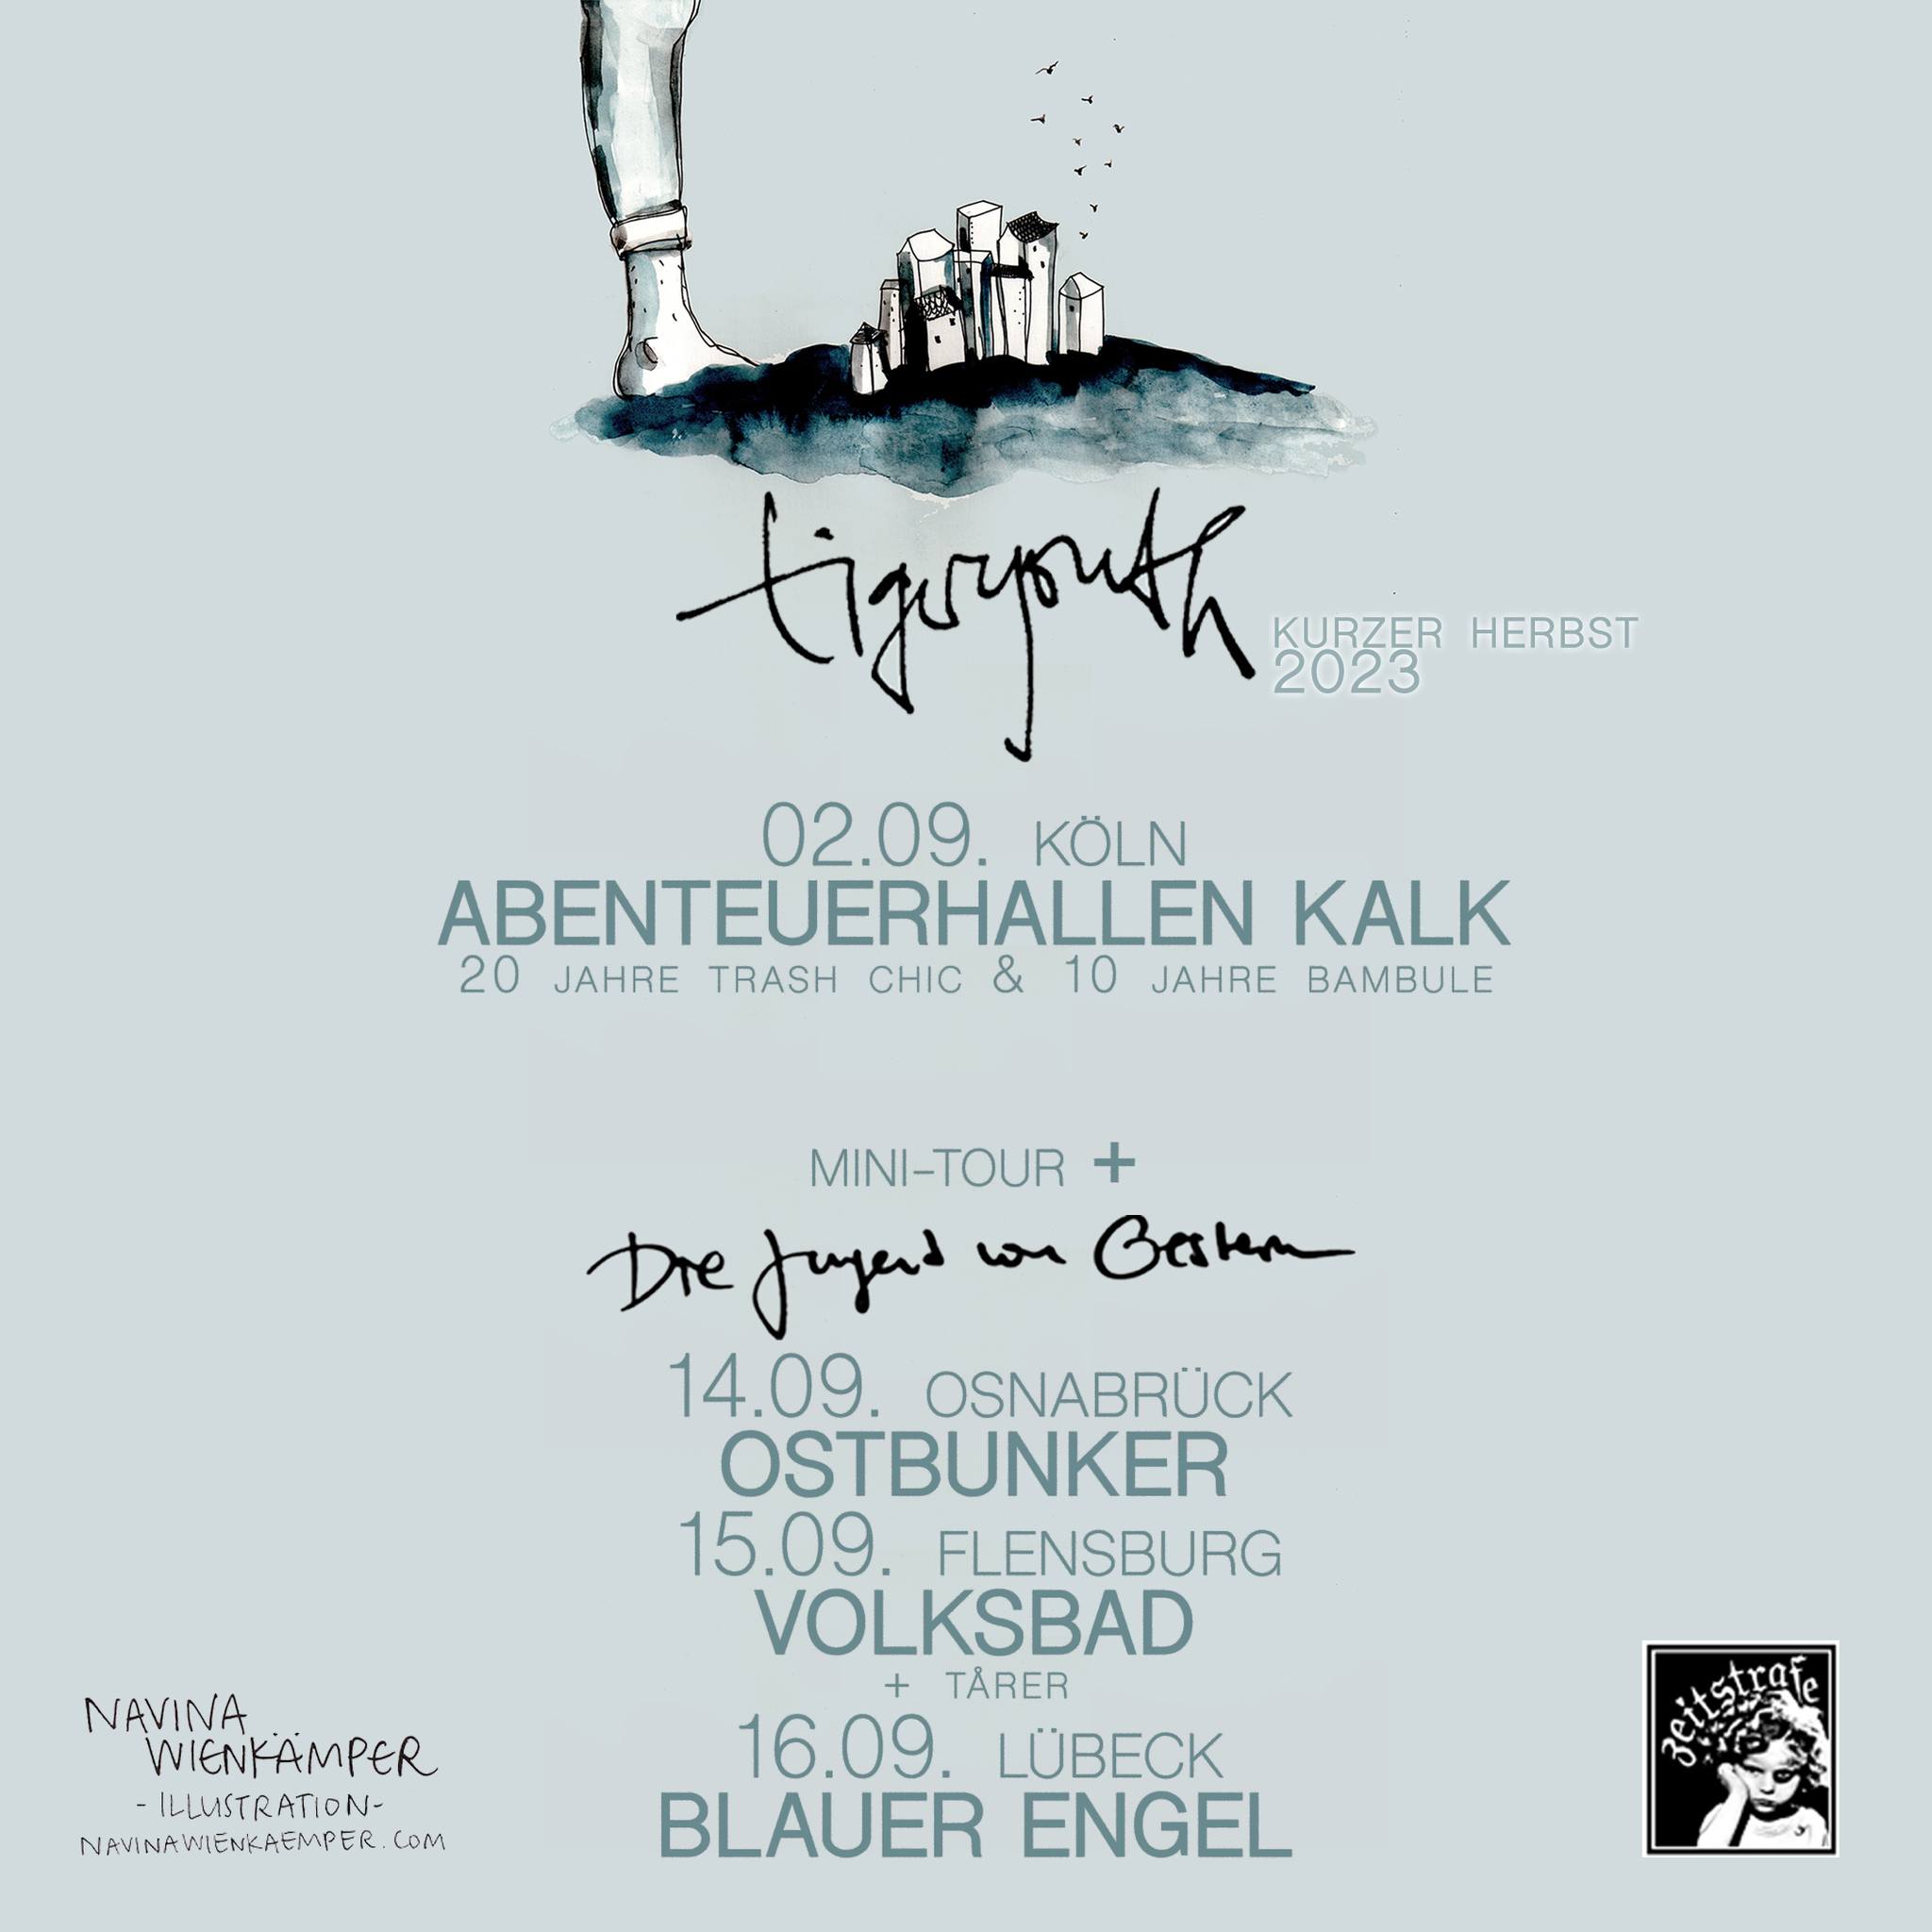 Tigeryouth am 14.09.2023 im Ostbunker Osnabrück